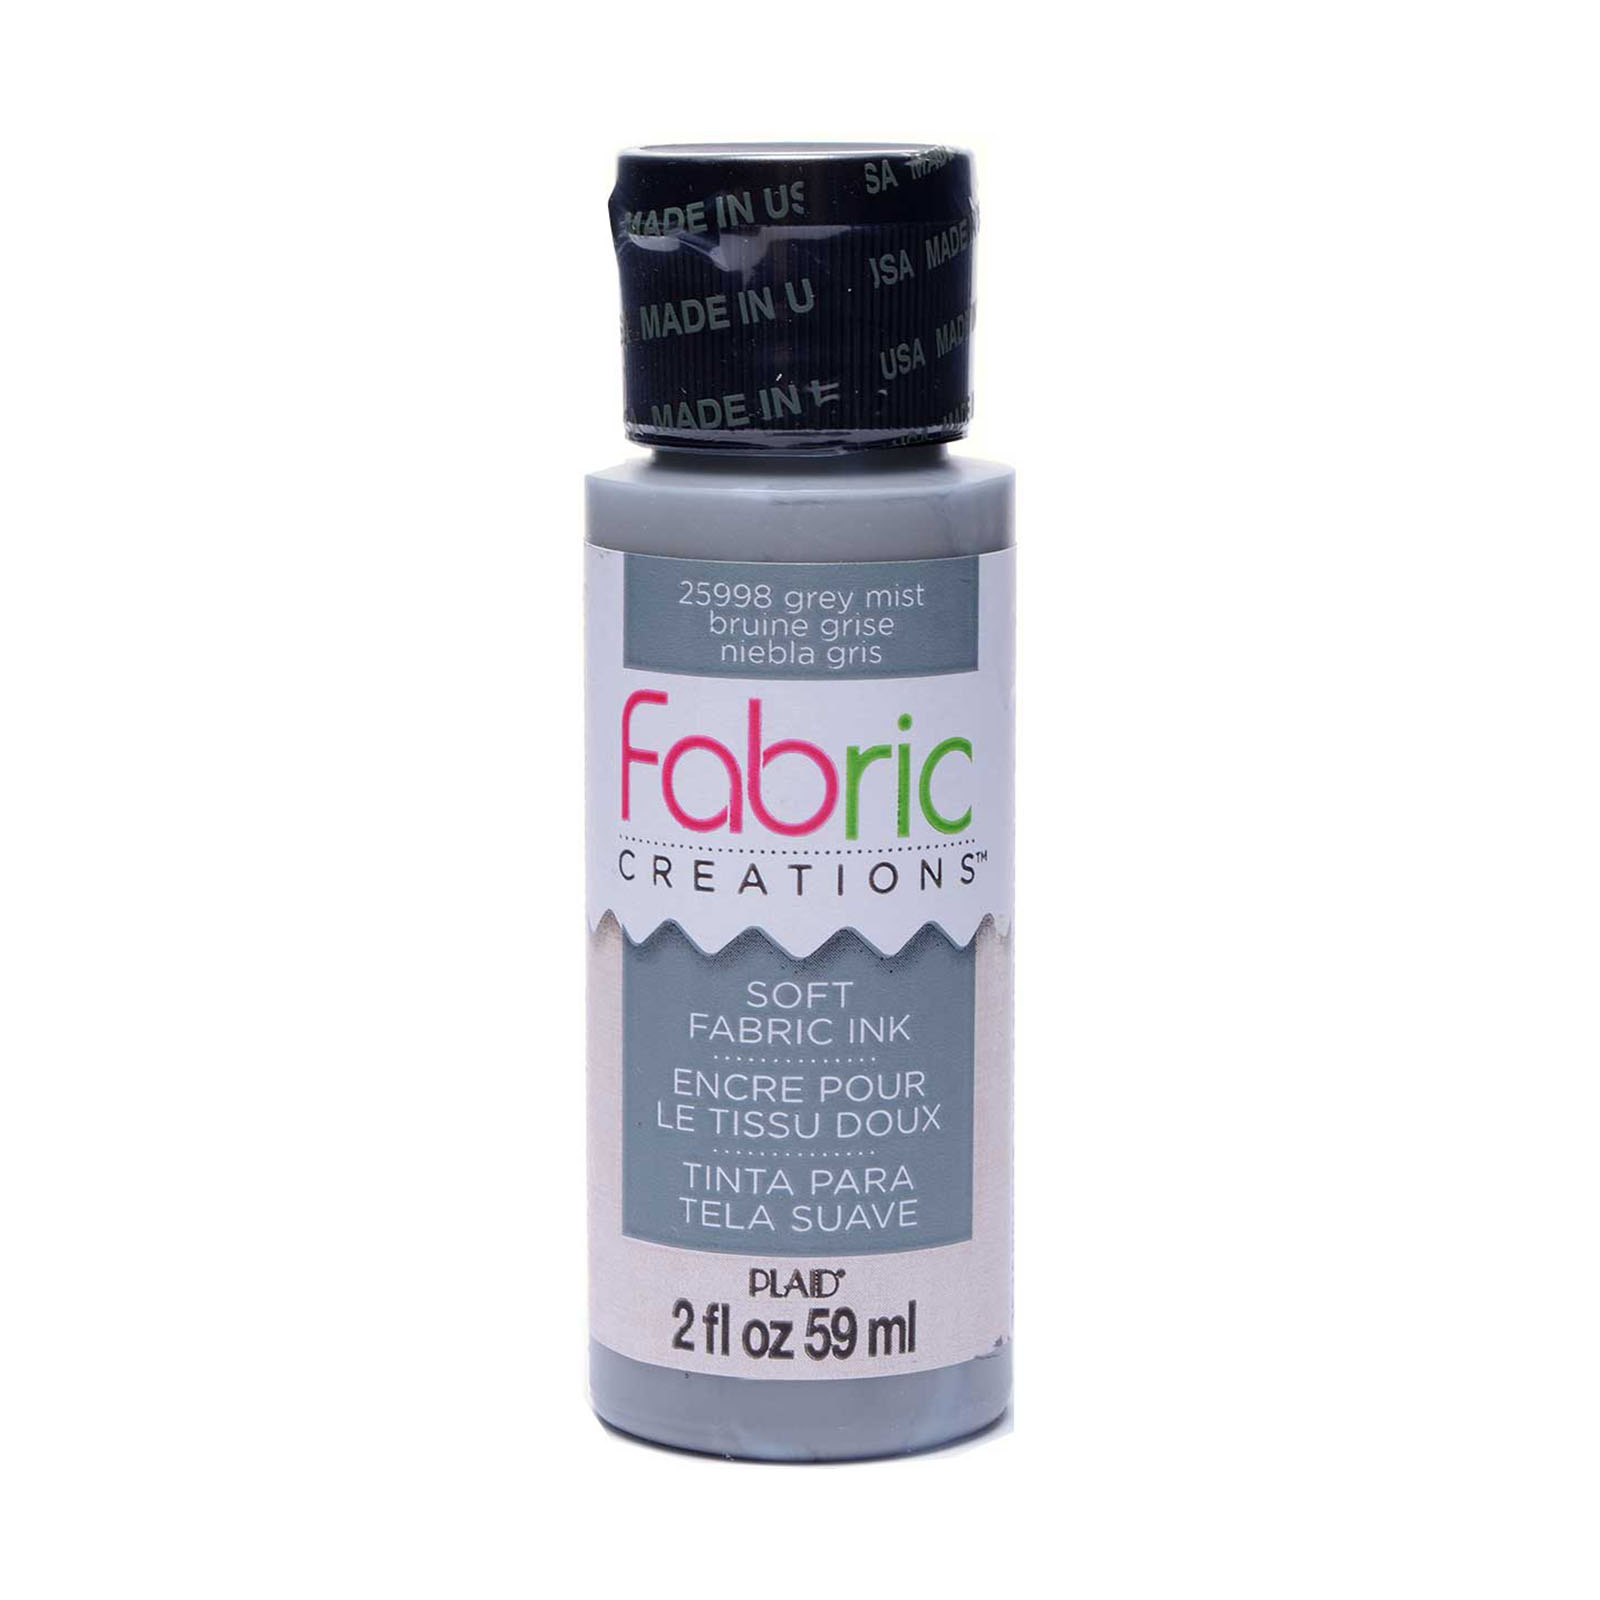 Fabric Creations • Soft fabric inkt 59ml Grey mist